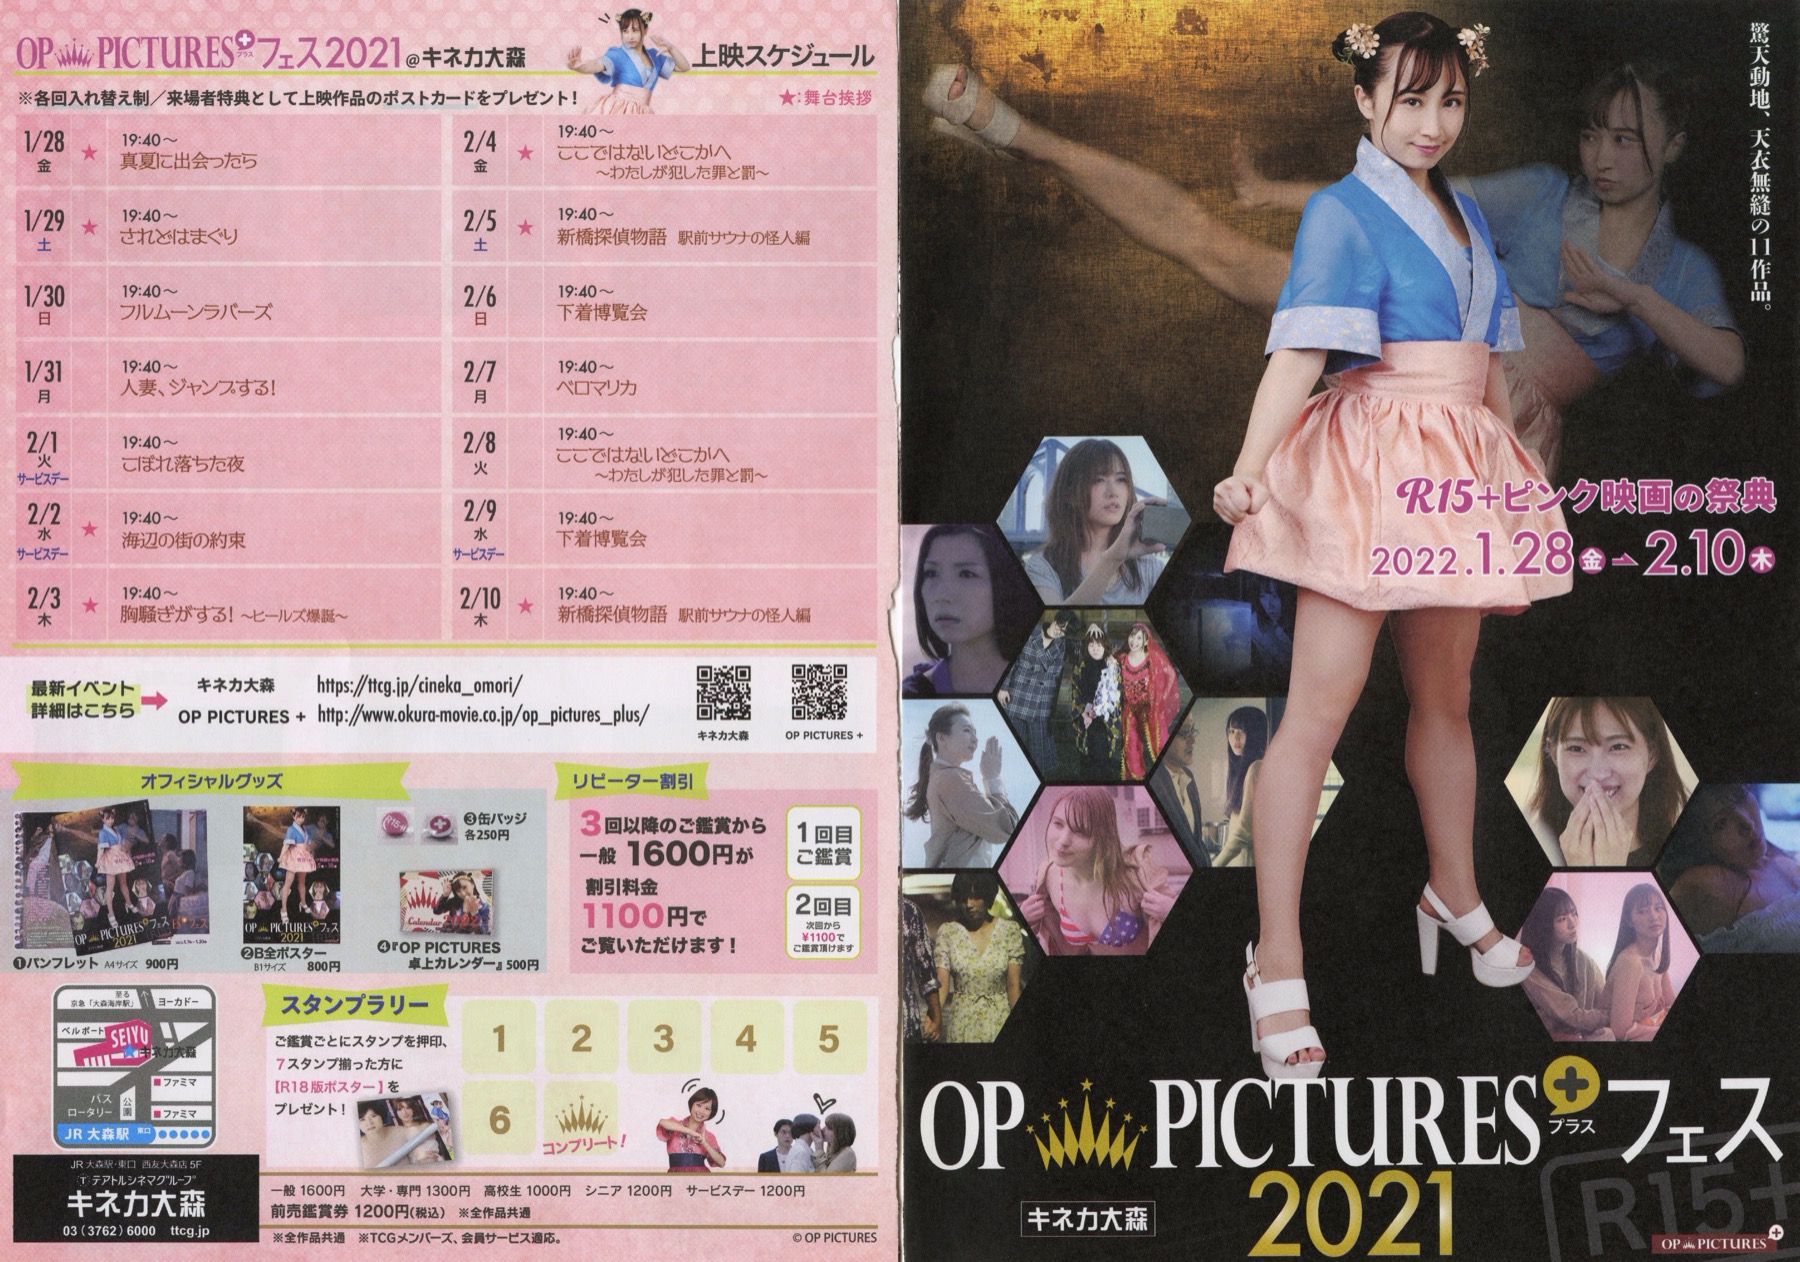 OP PICTURES+フェス 2021 R15+ピンク映画の祭典